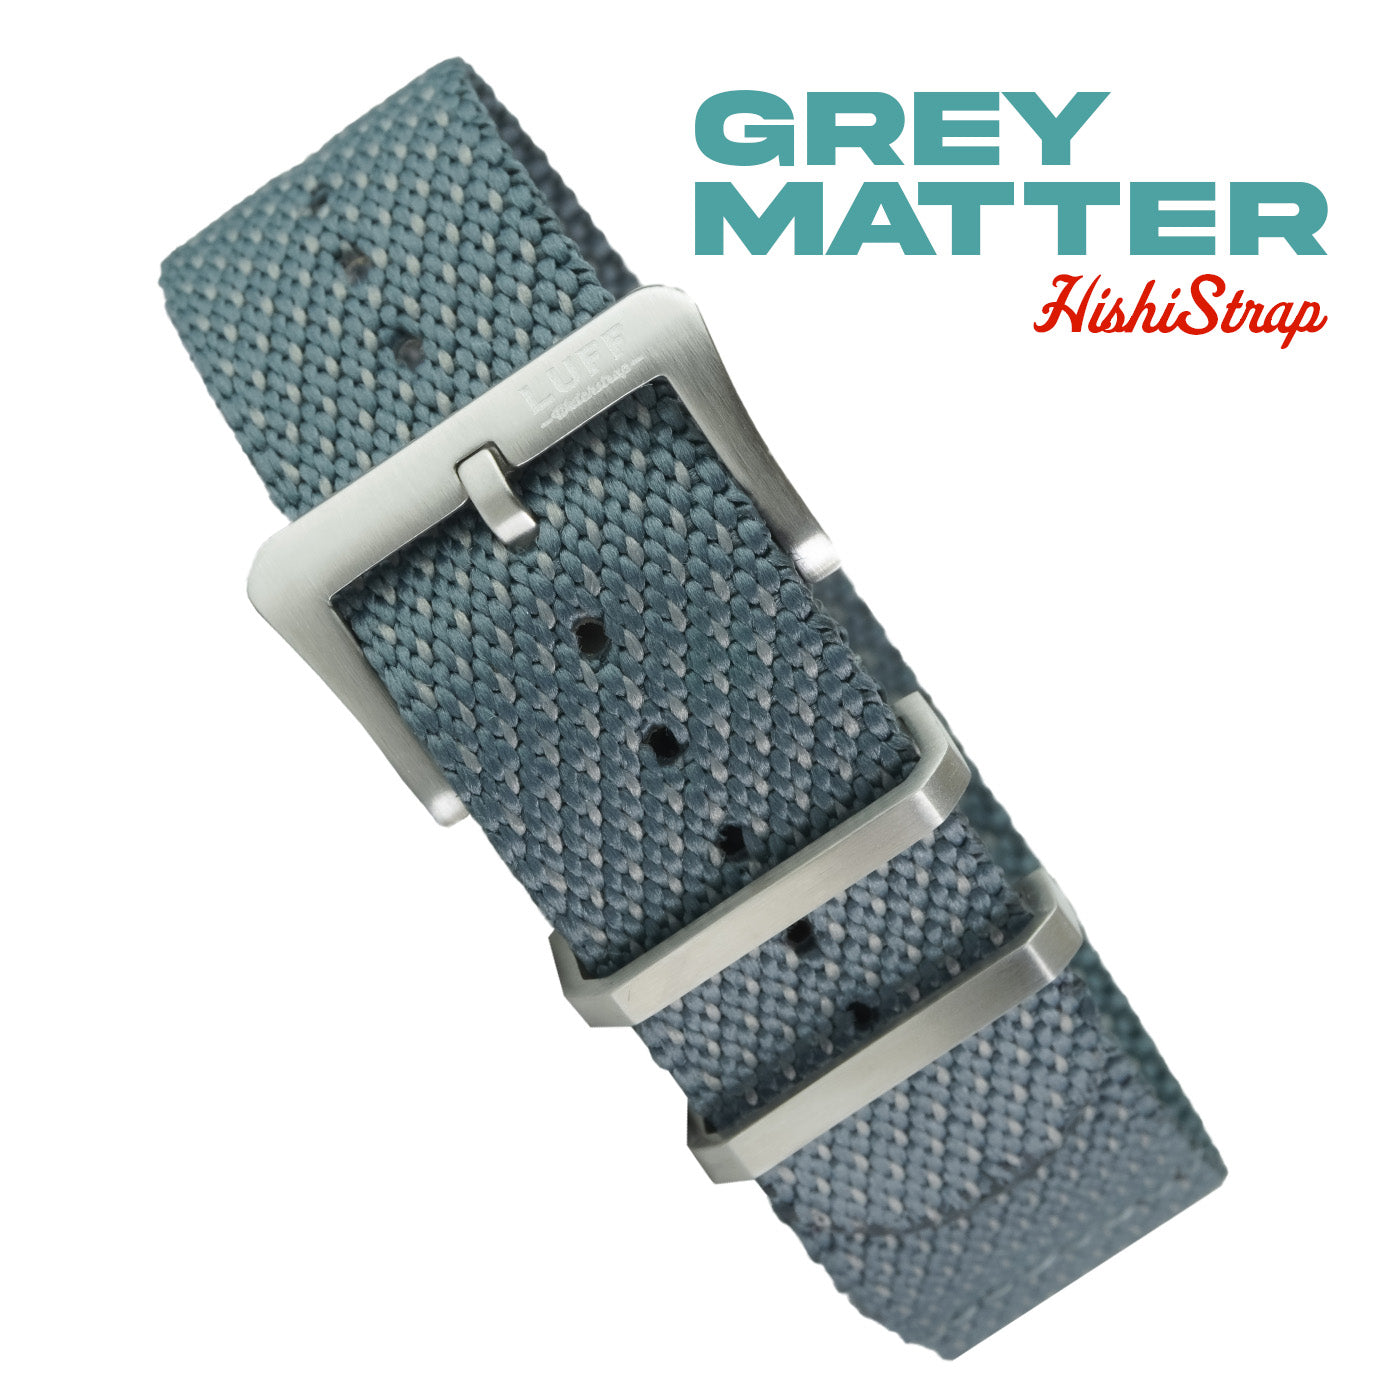 Grey Matter - HISHI STRAP 20mm (6873496289367)